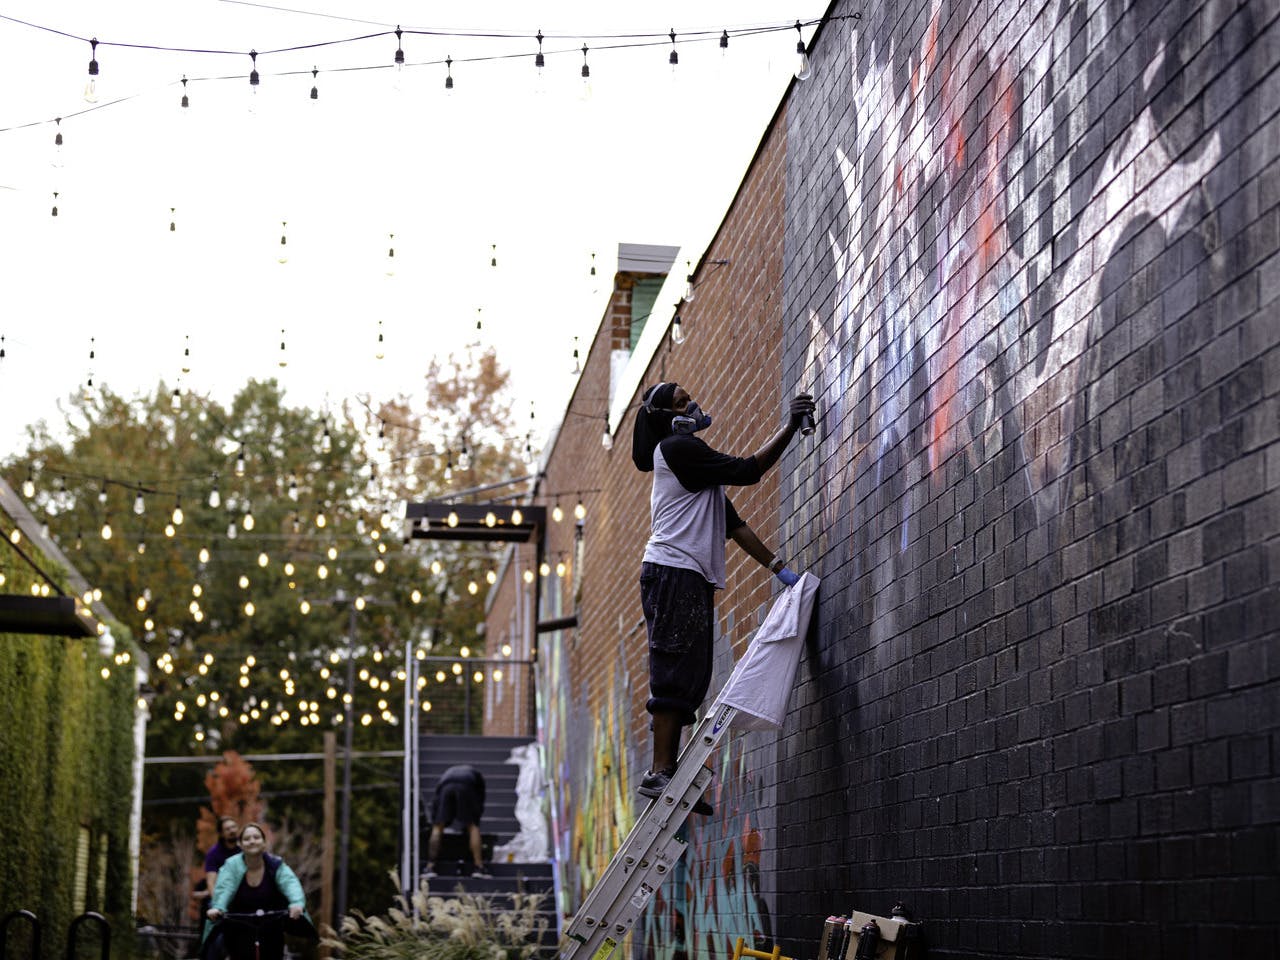 A man paints a brick wall using spray paint.